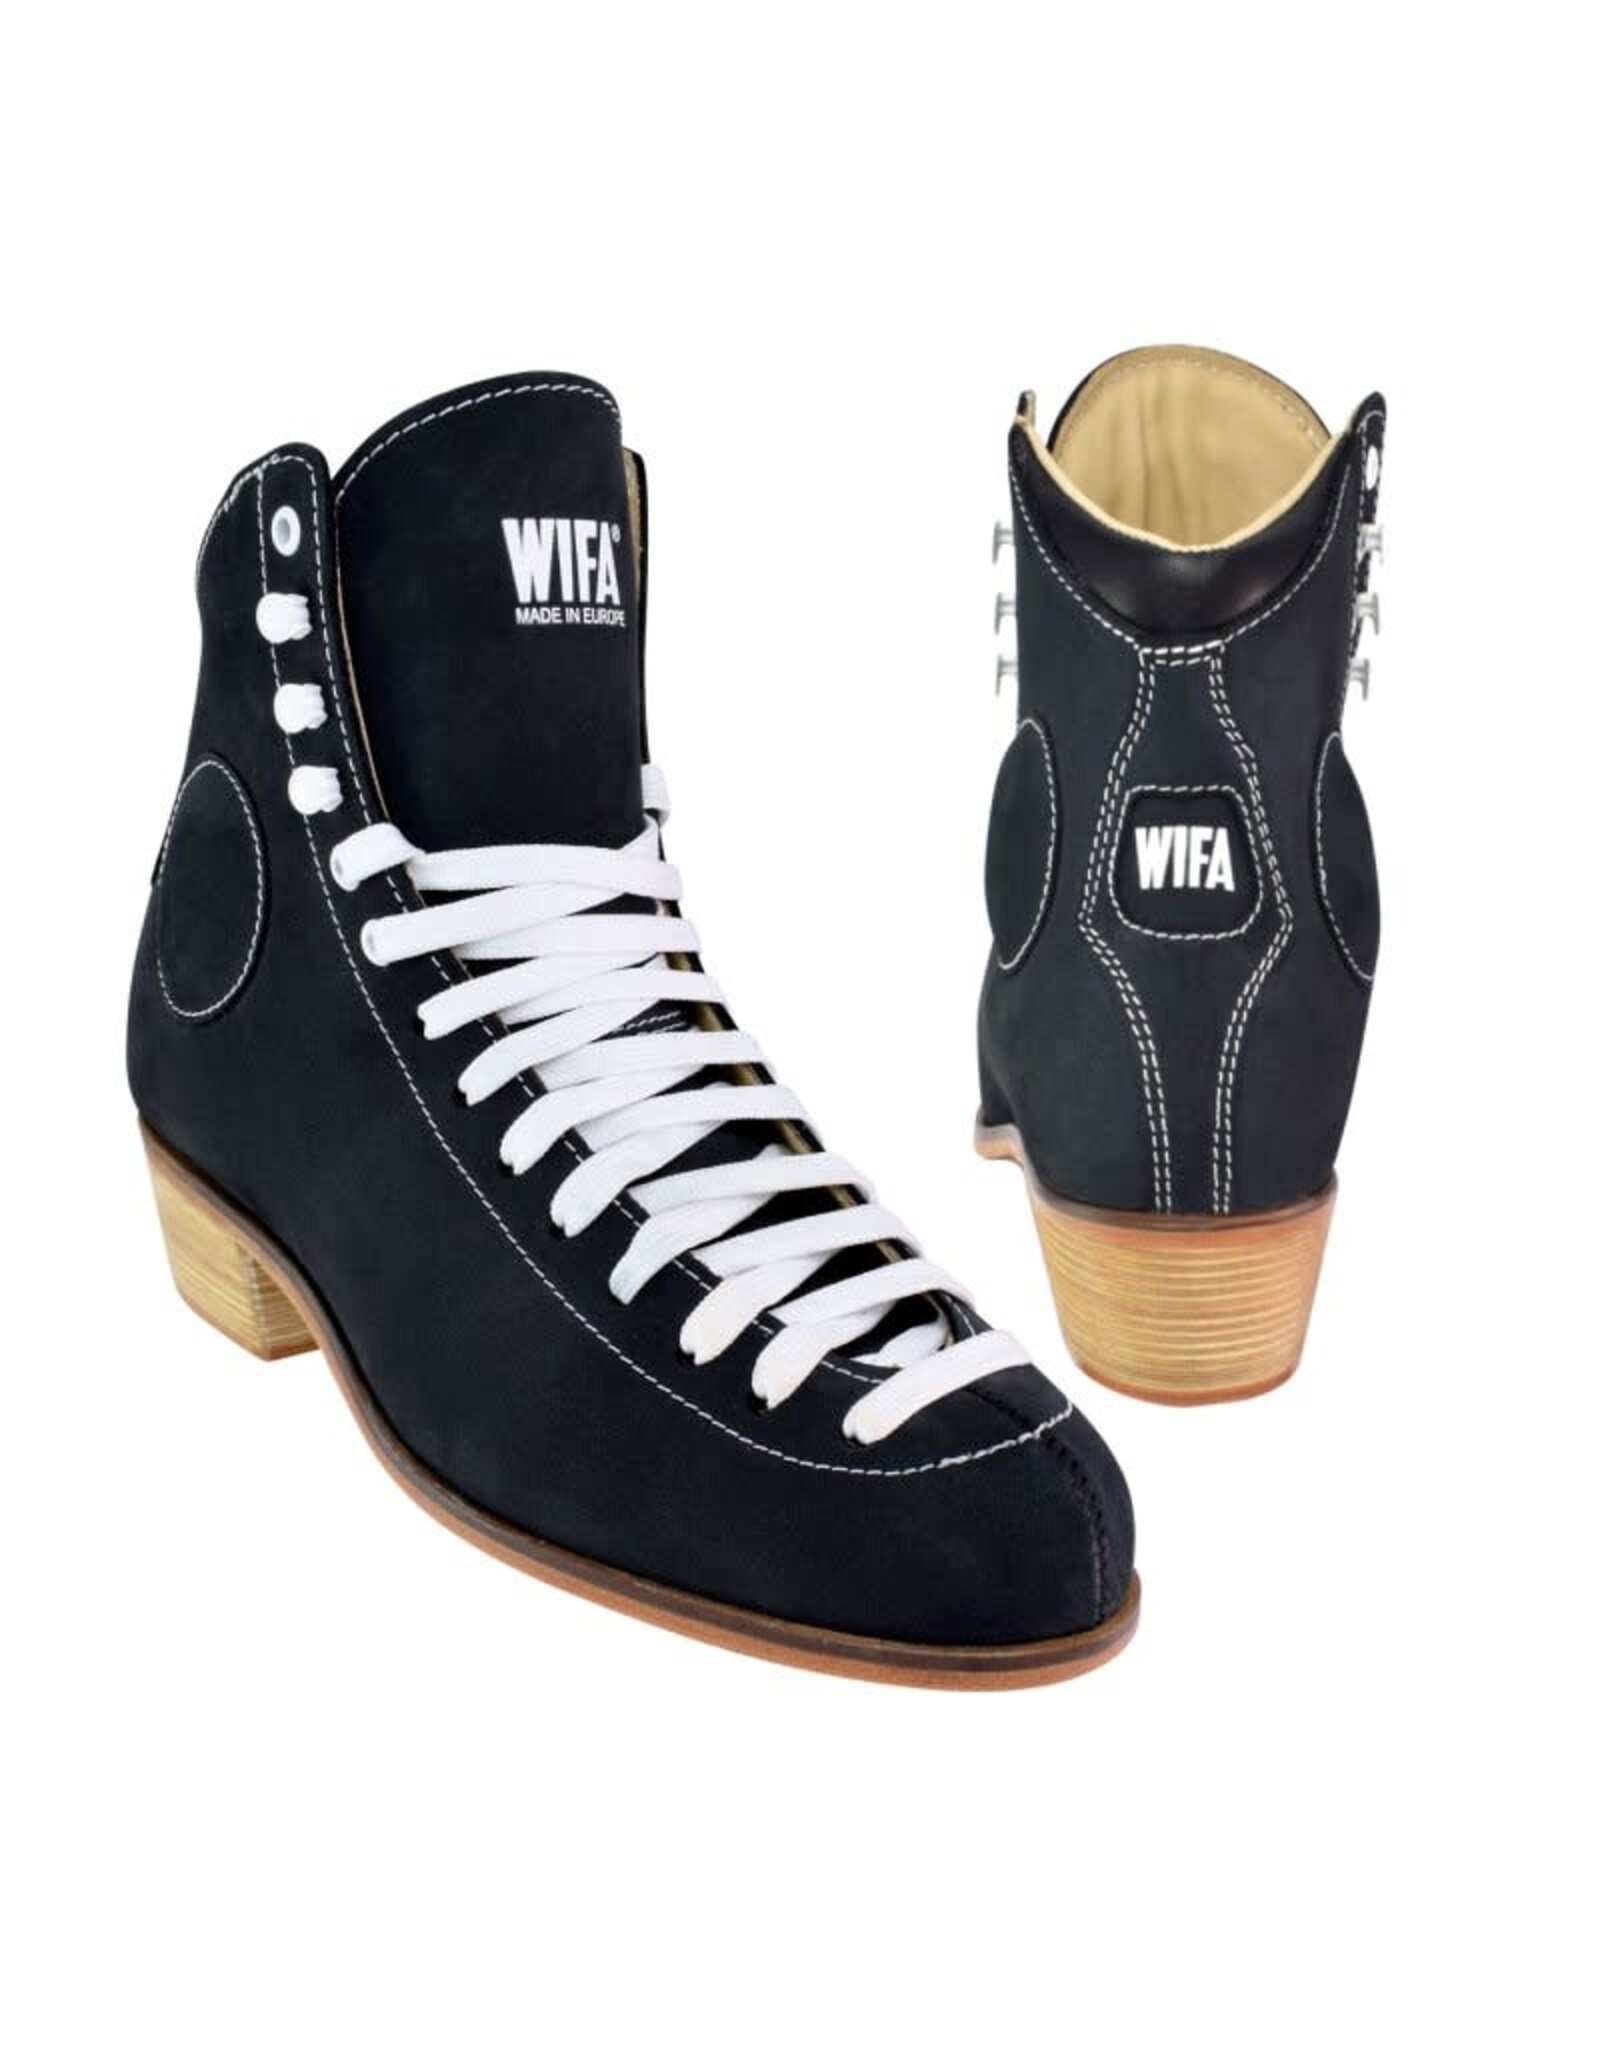 Wifa WIFA Street Deluxe (boot only)